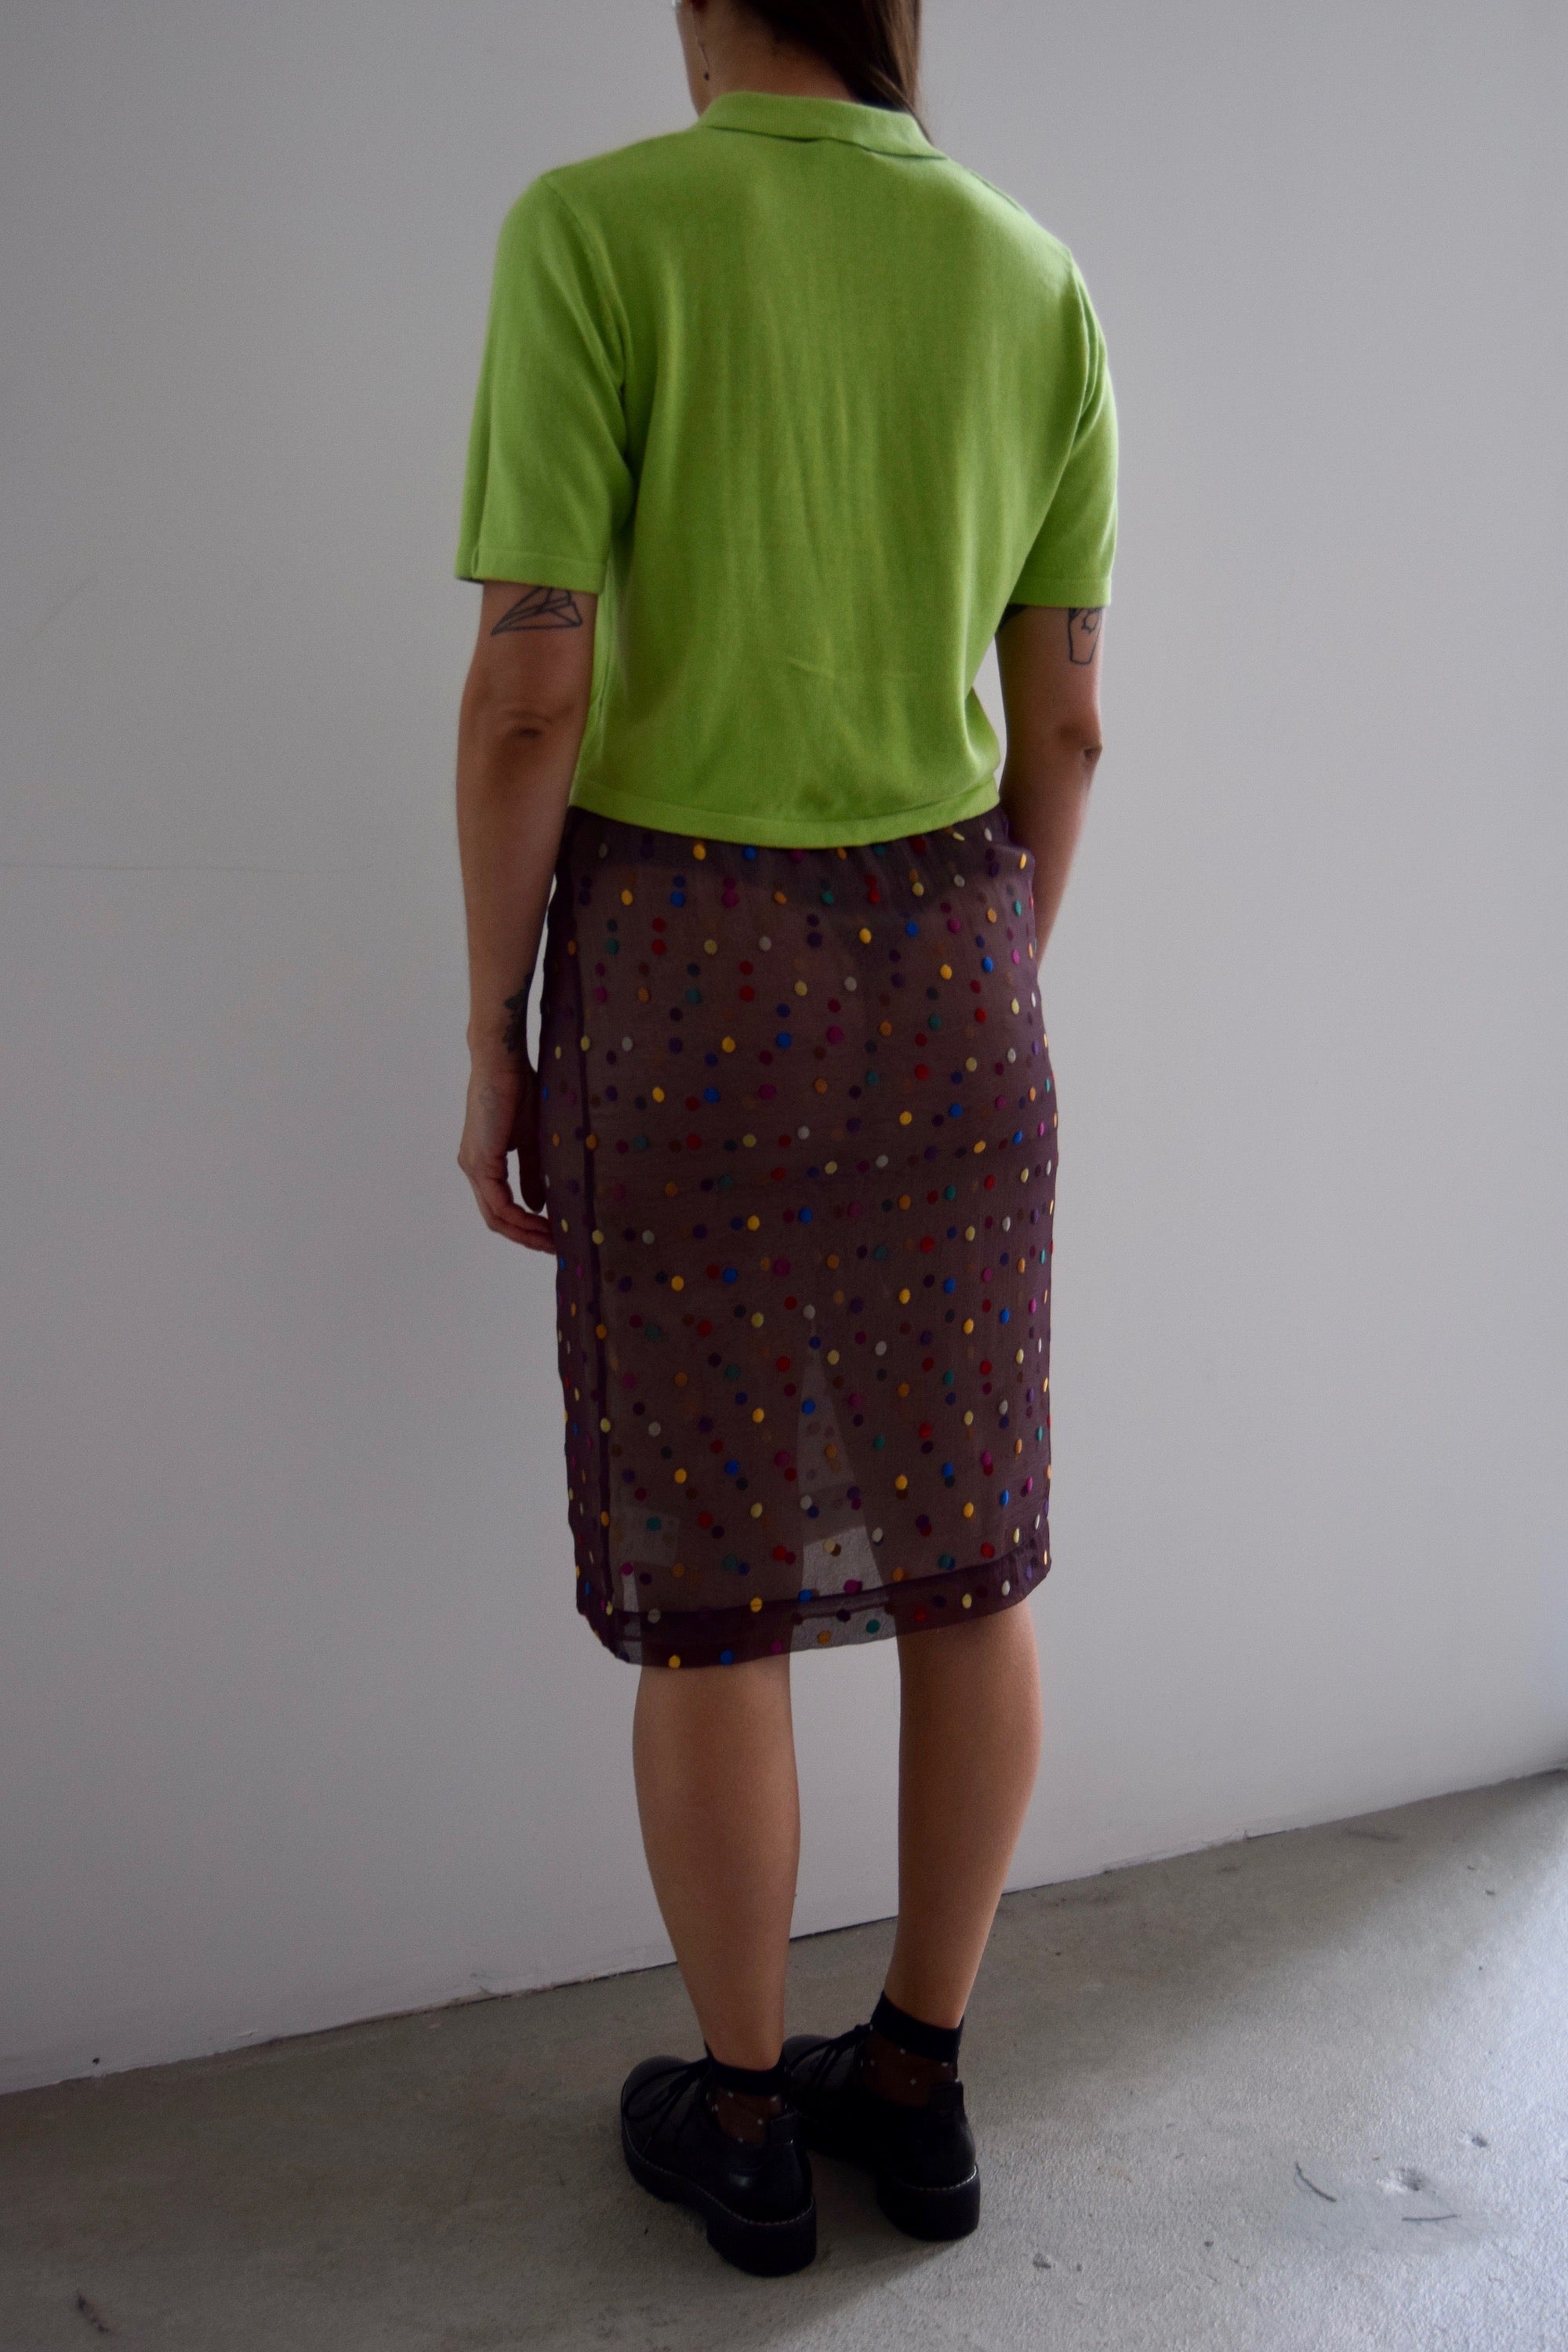 Clements Ribeiro Rainbow Dot Silk Chiffon Skirt